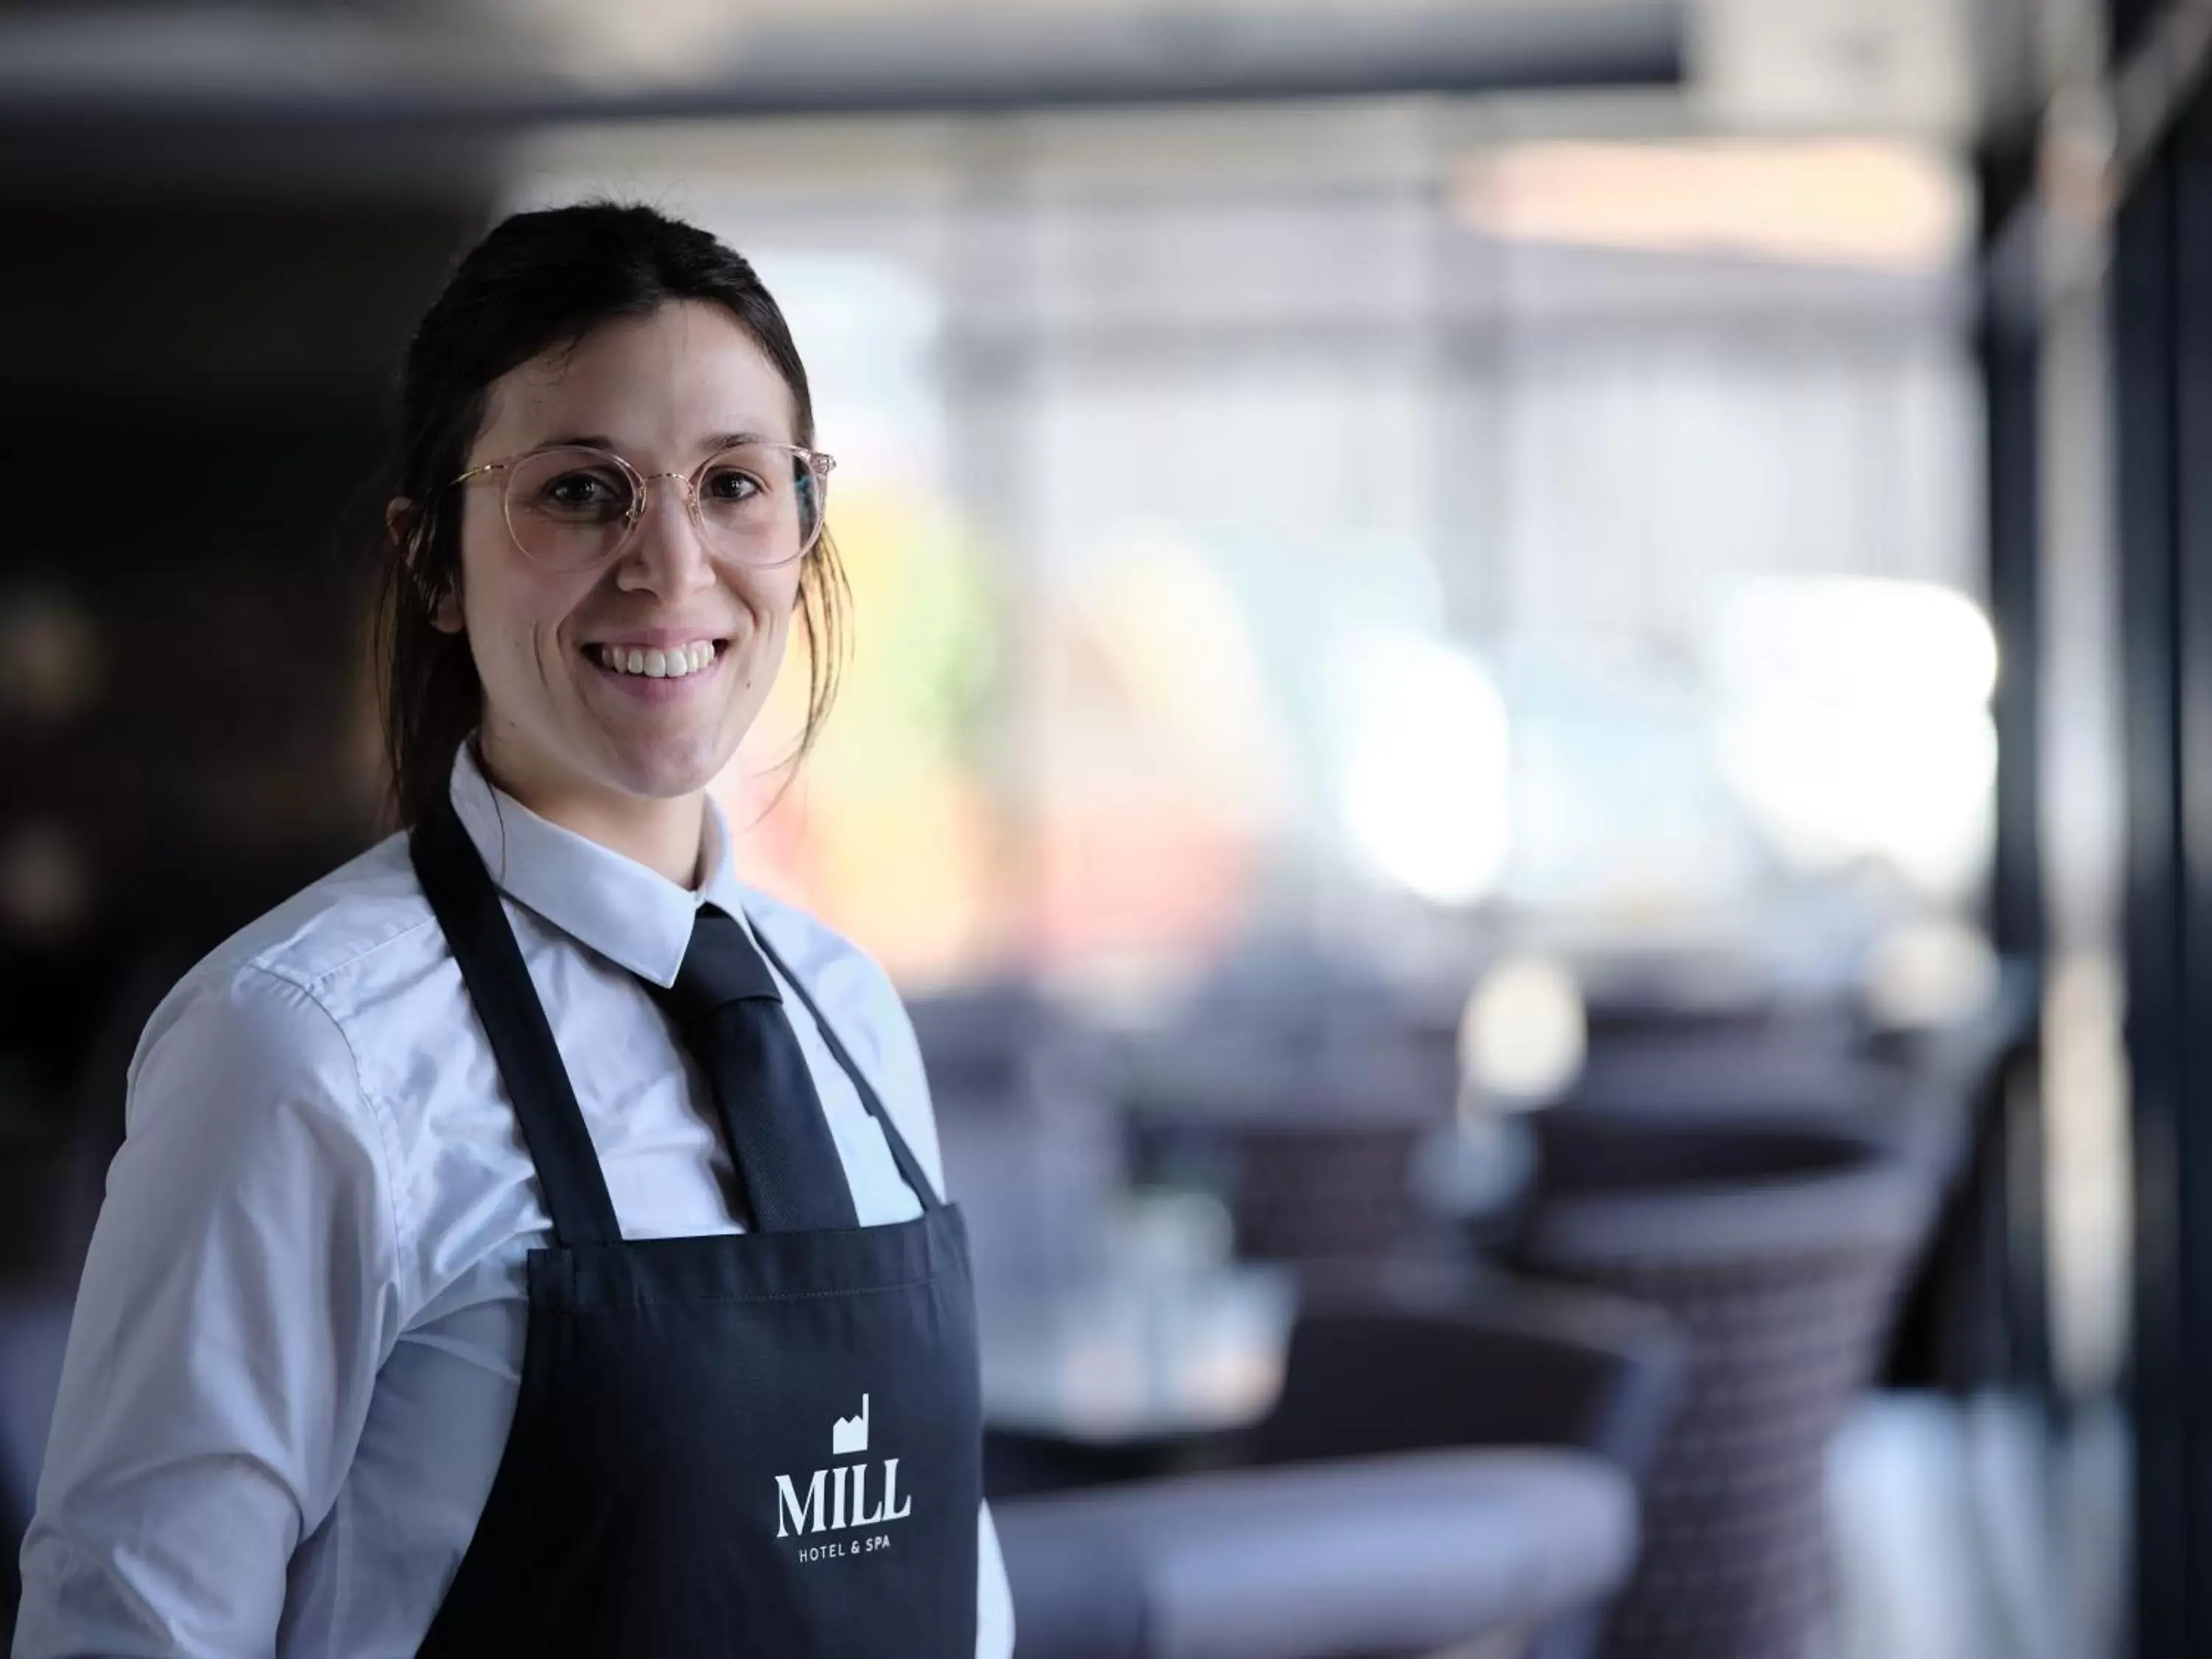 Staff in MILL Hotel & Spa